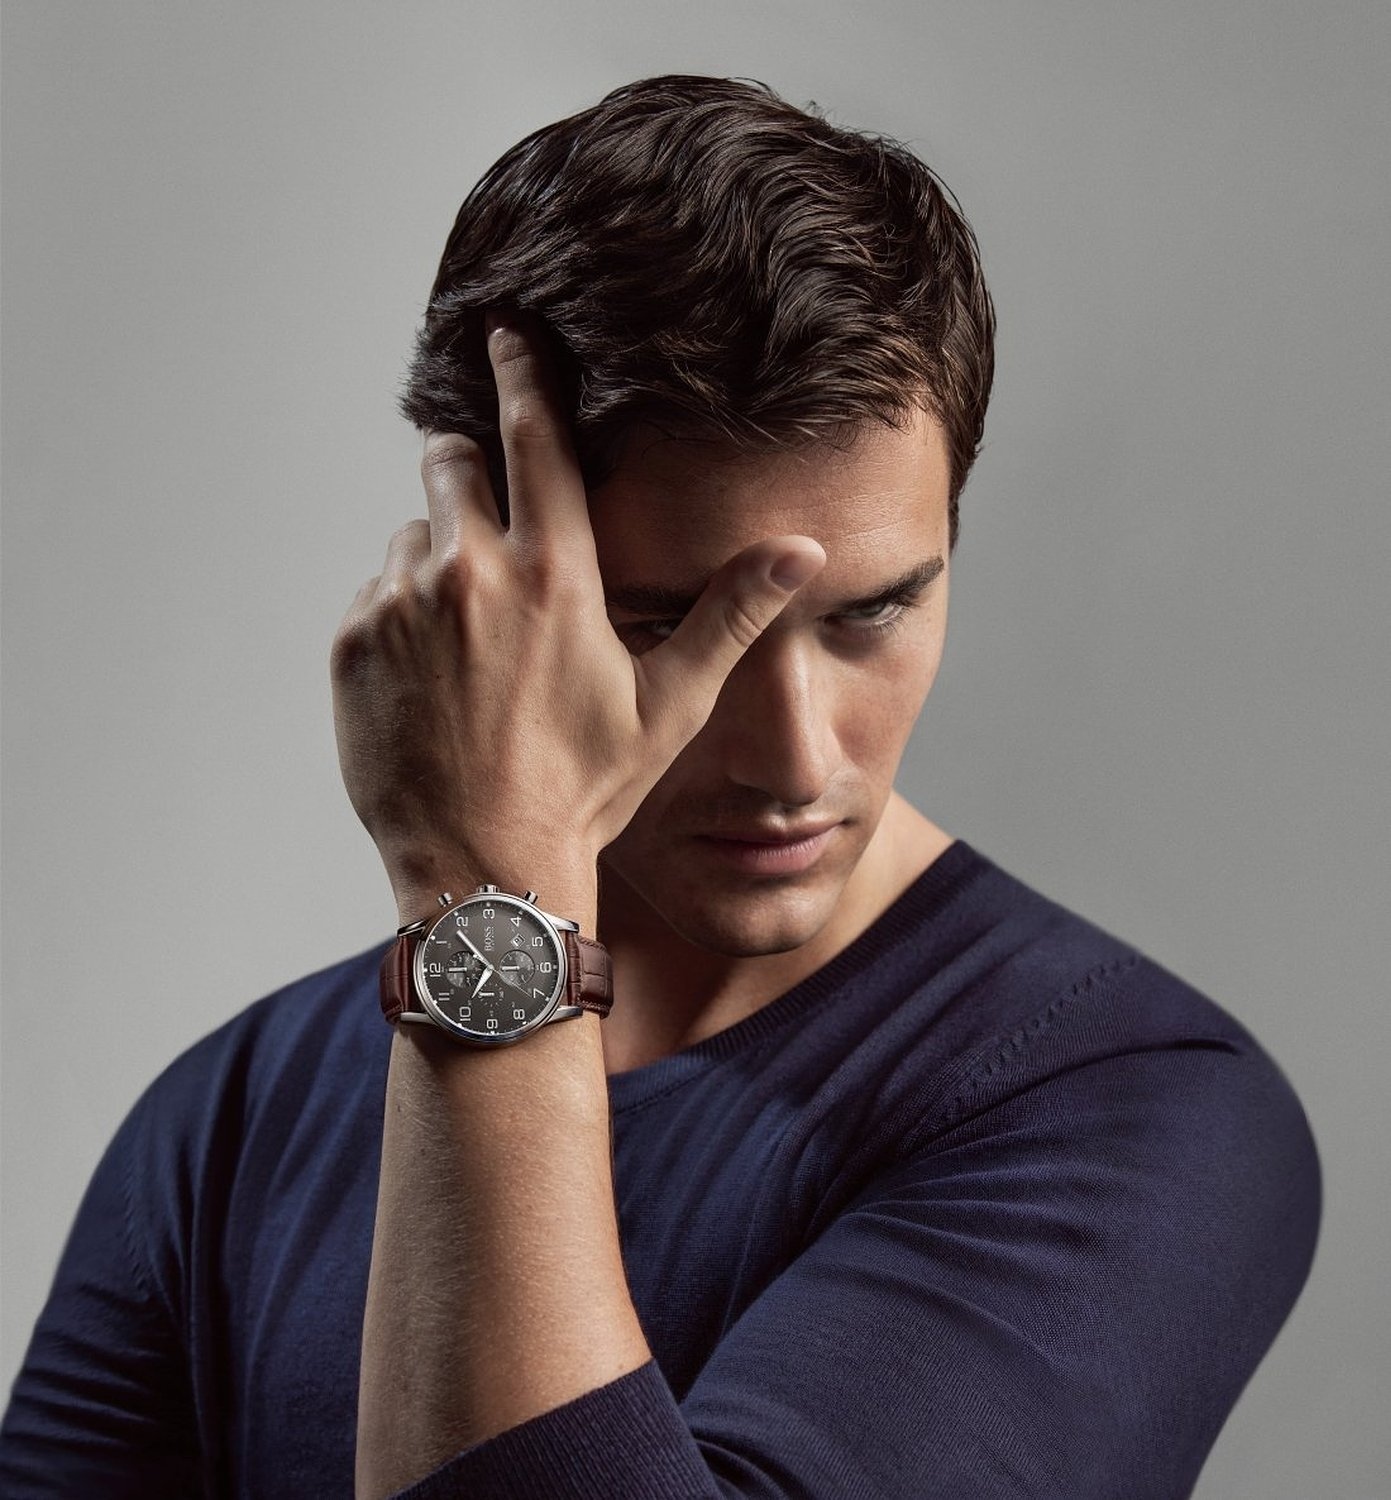 К чему снятся наручные часы на руке. Hugo Boss кольцо мужское. Мужские часы на руке. Мужчина с часами на руке. Красивые мужские часы на руку.